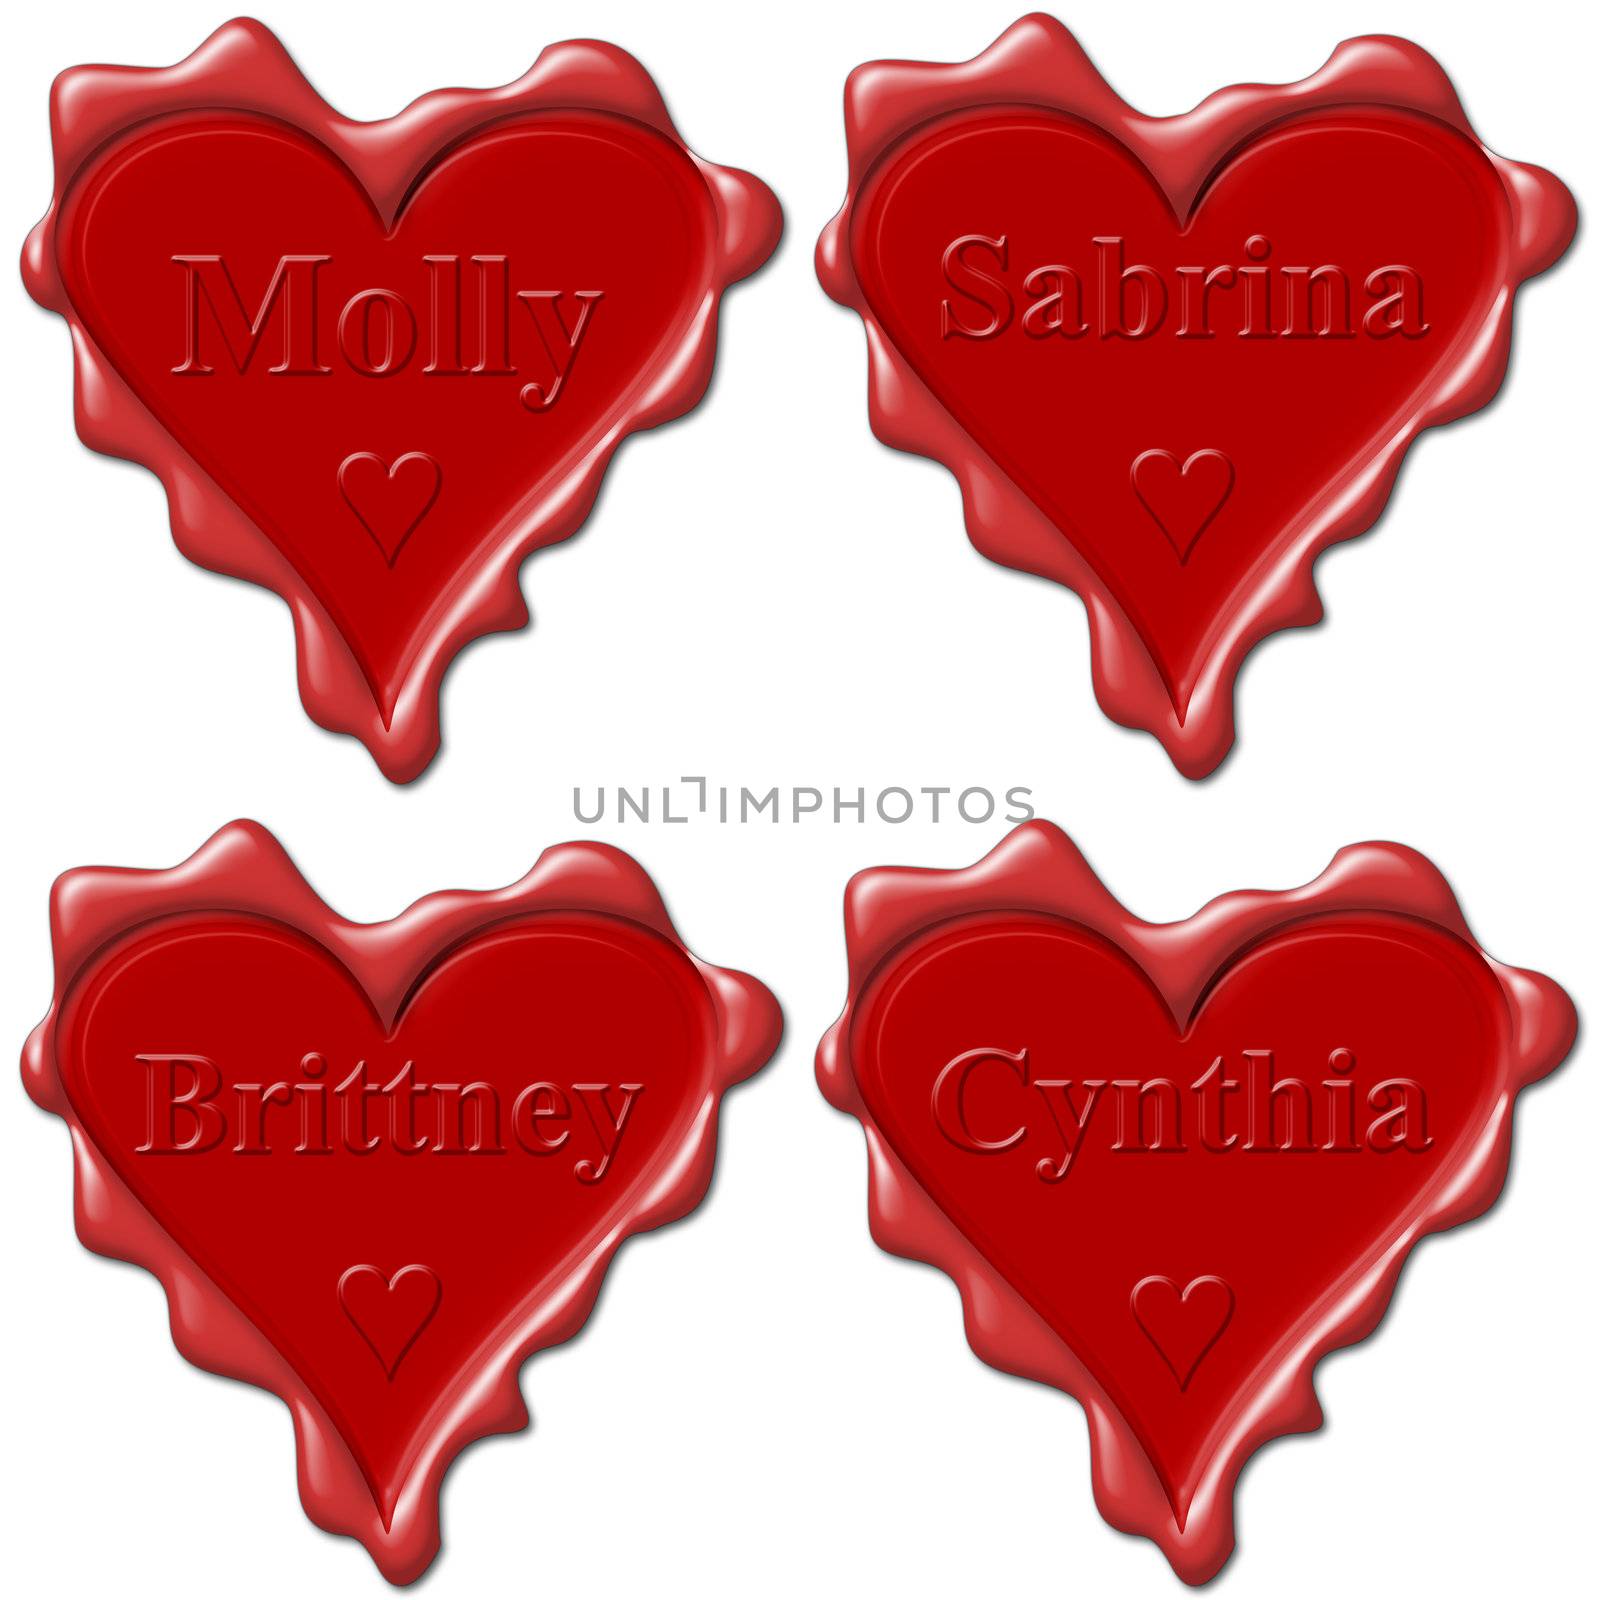 Valentine love hearts with names: Molly, Sabrina, Brittney, Cynthia